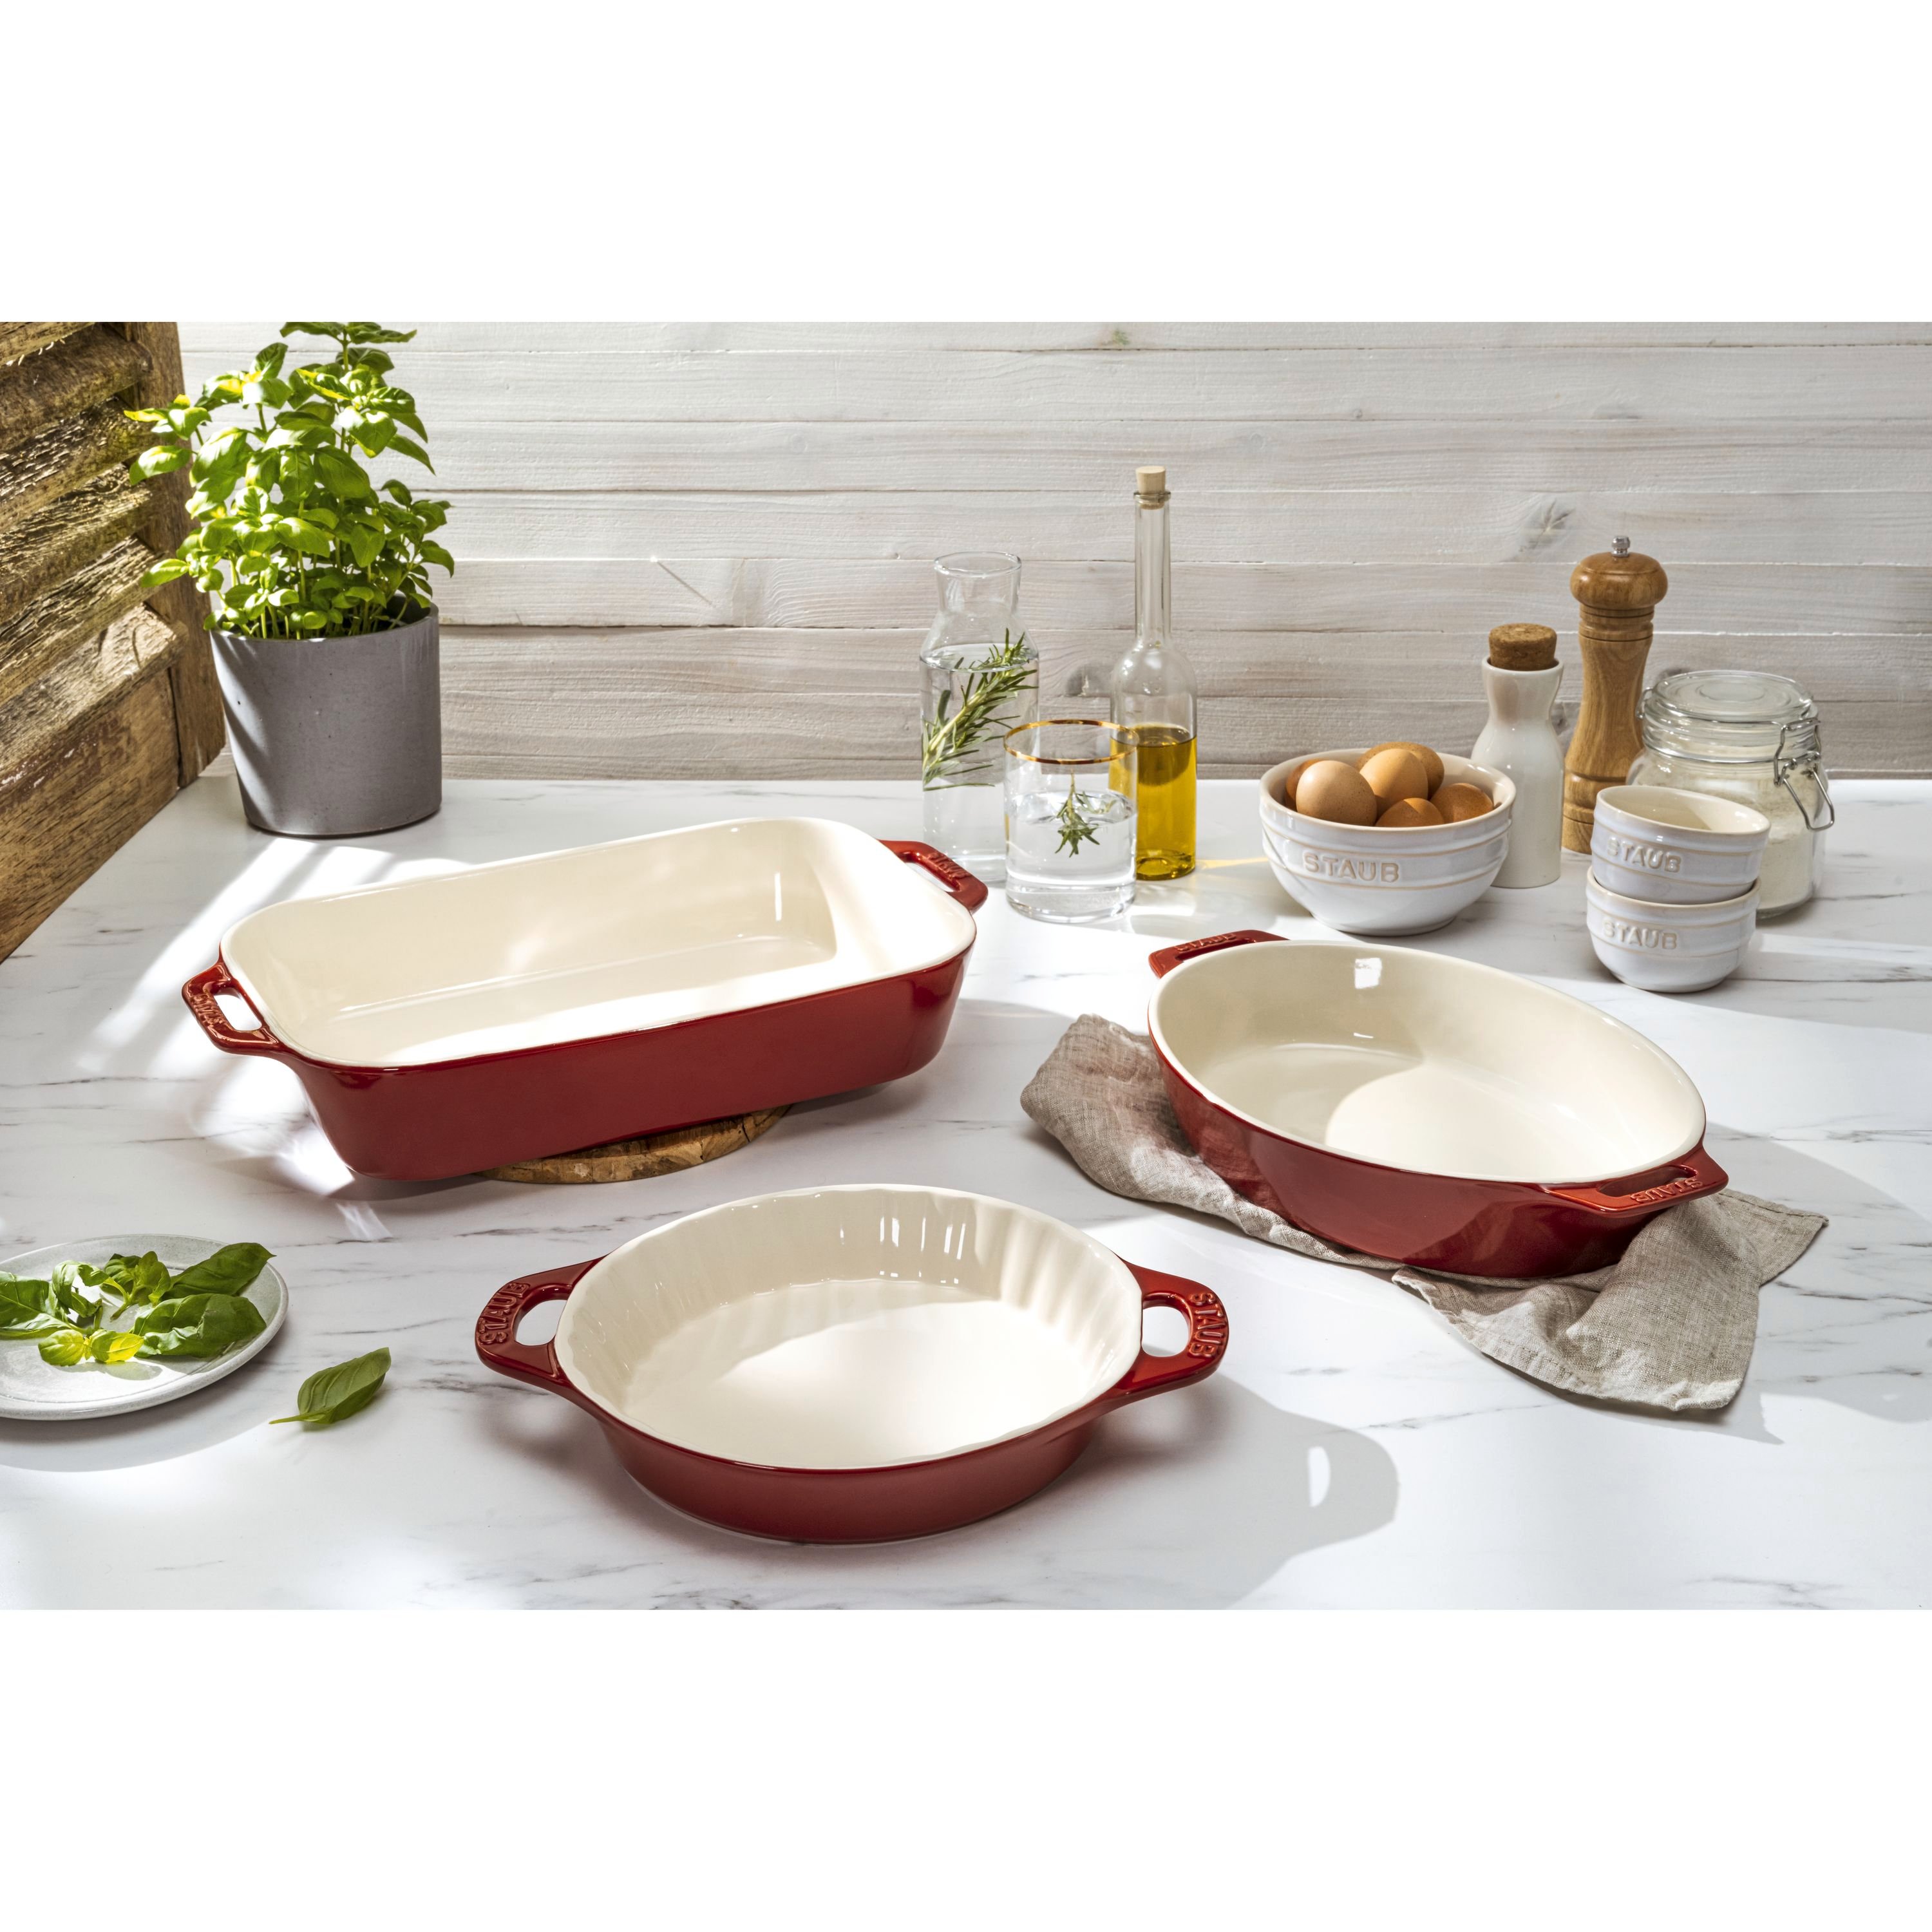 Staub 2-Piece Ceramic Nesting Oval Baking Dishes Set, White